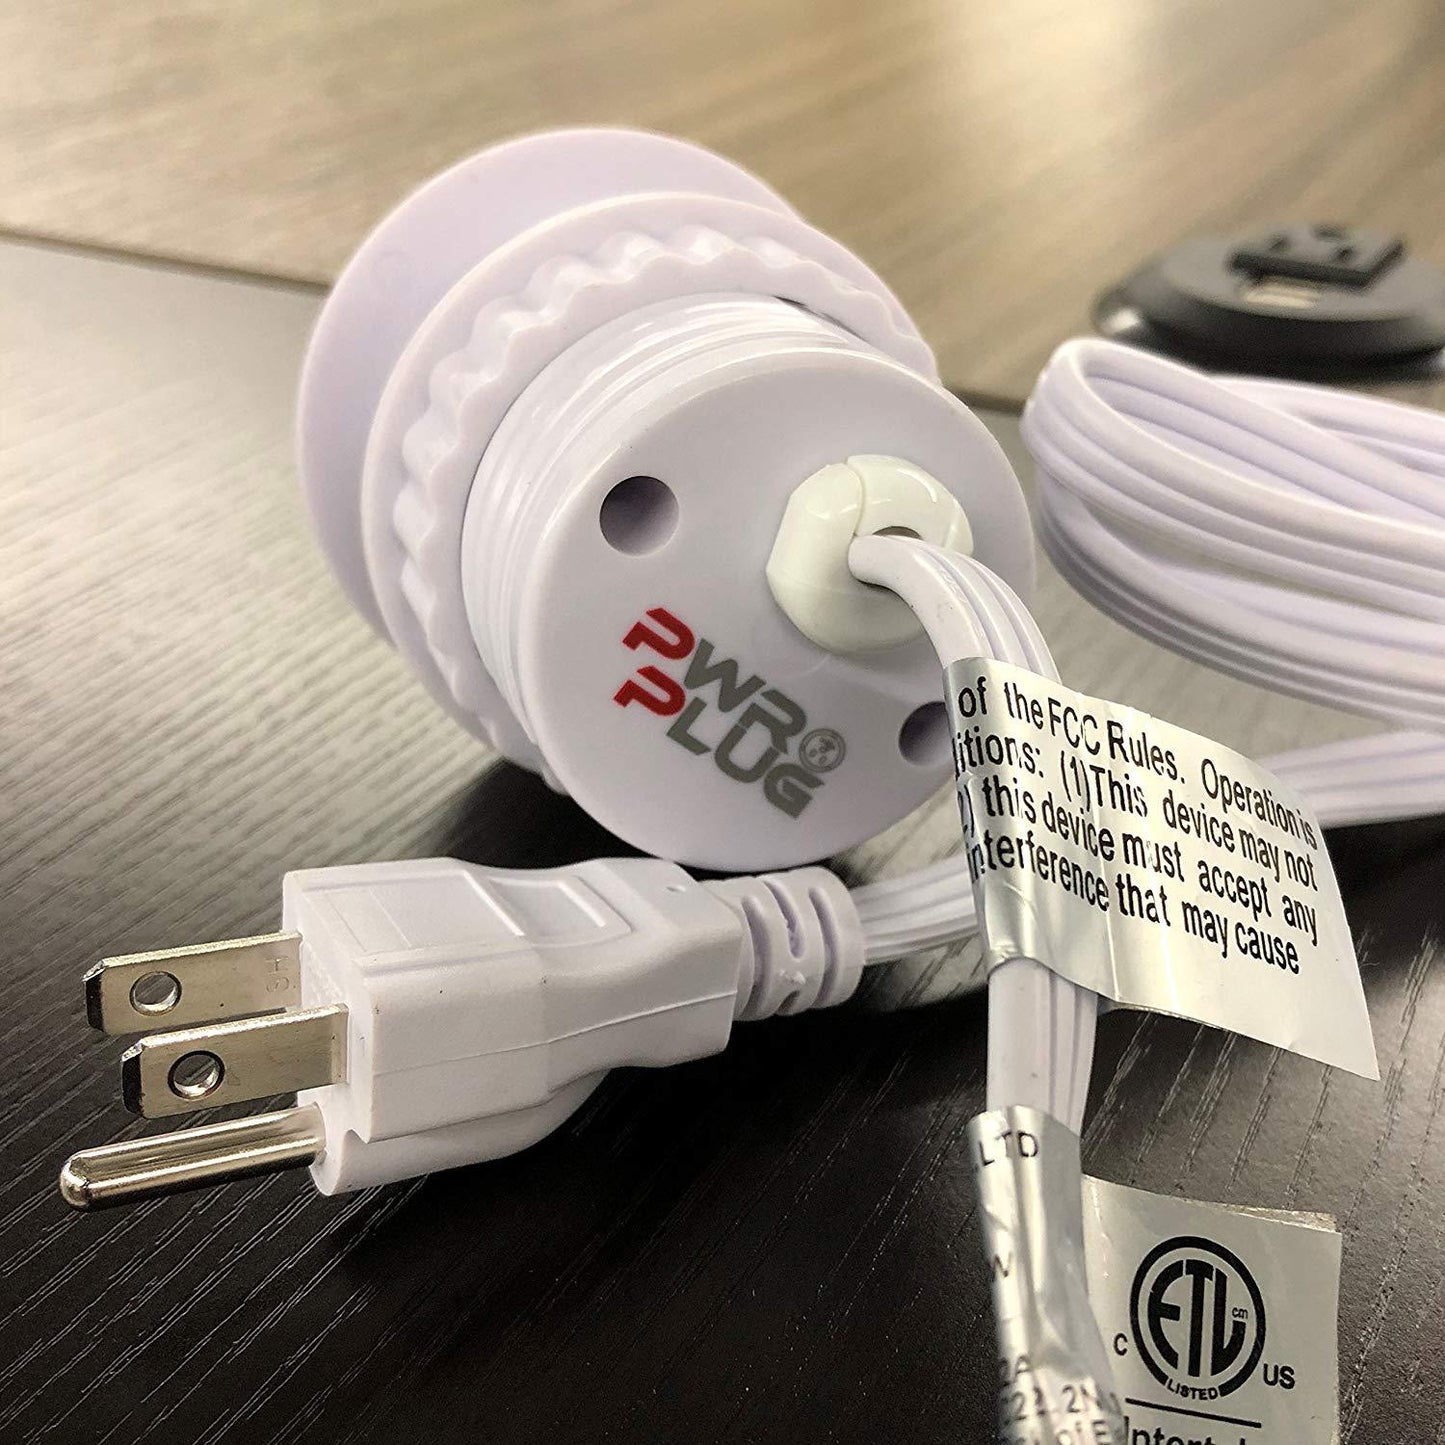 PWR-Plug With 2 USB Charging Ports - DC-8389